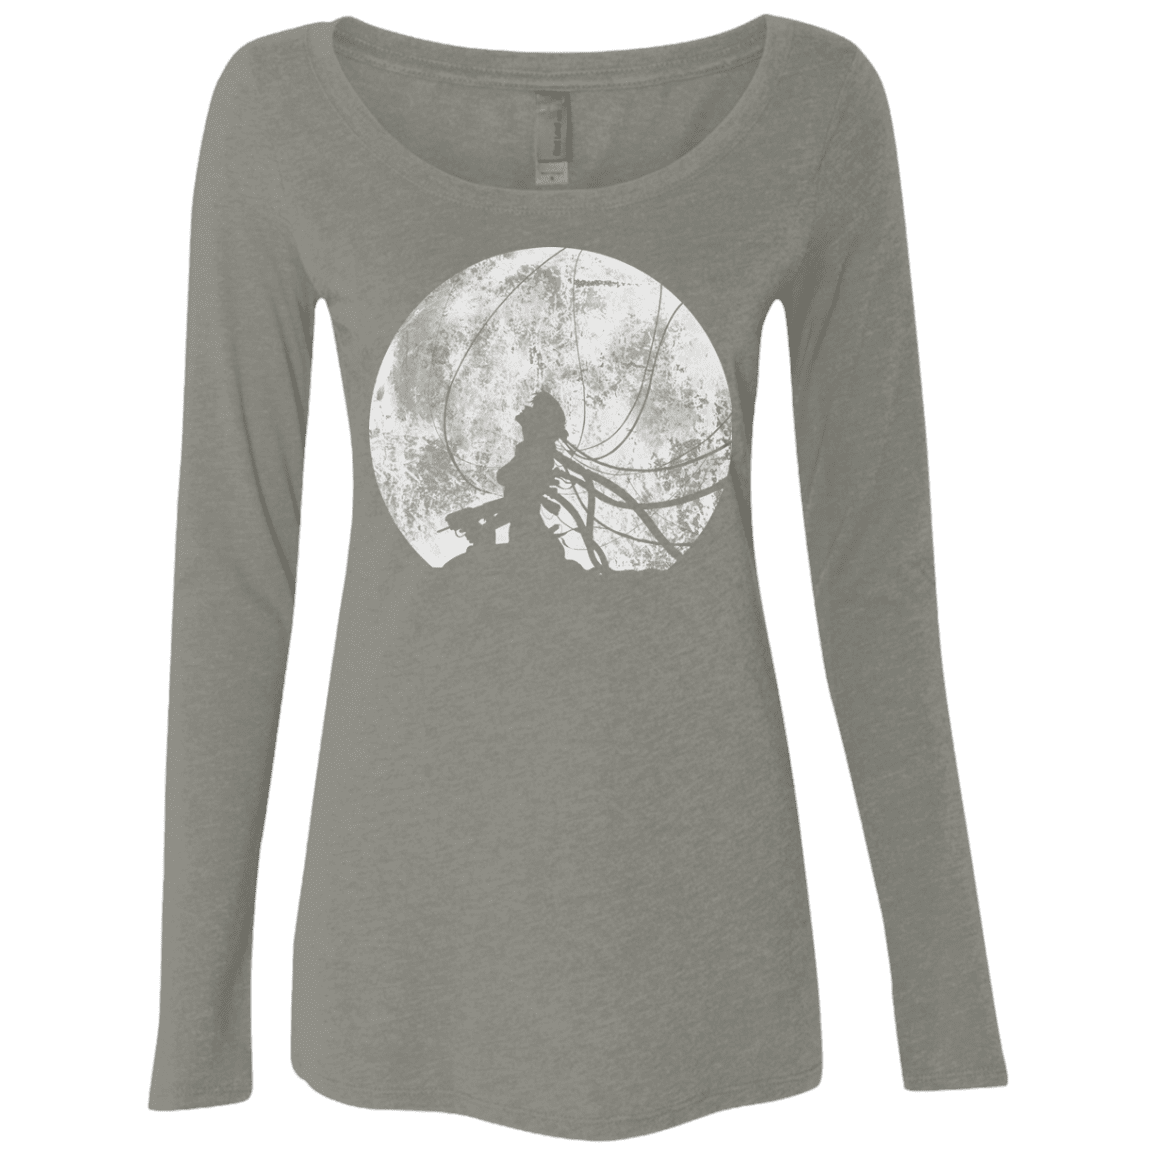 T-Shirts Venetian Grey / S Shell of a Ghost Women's Triblend Long Sleeve Shirt